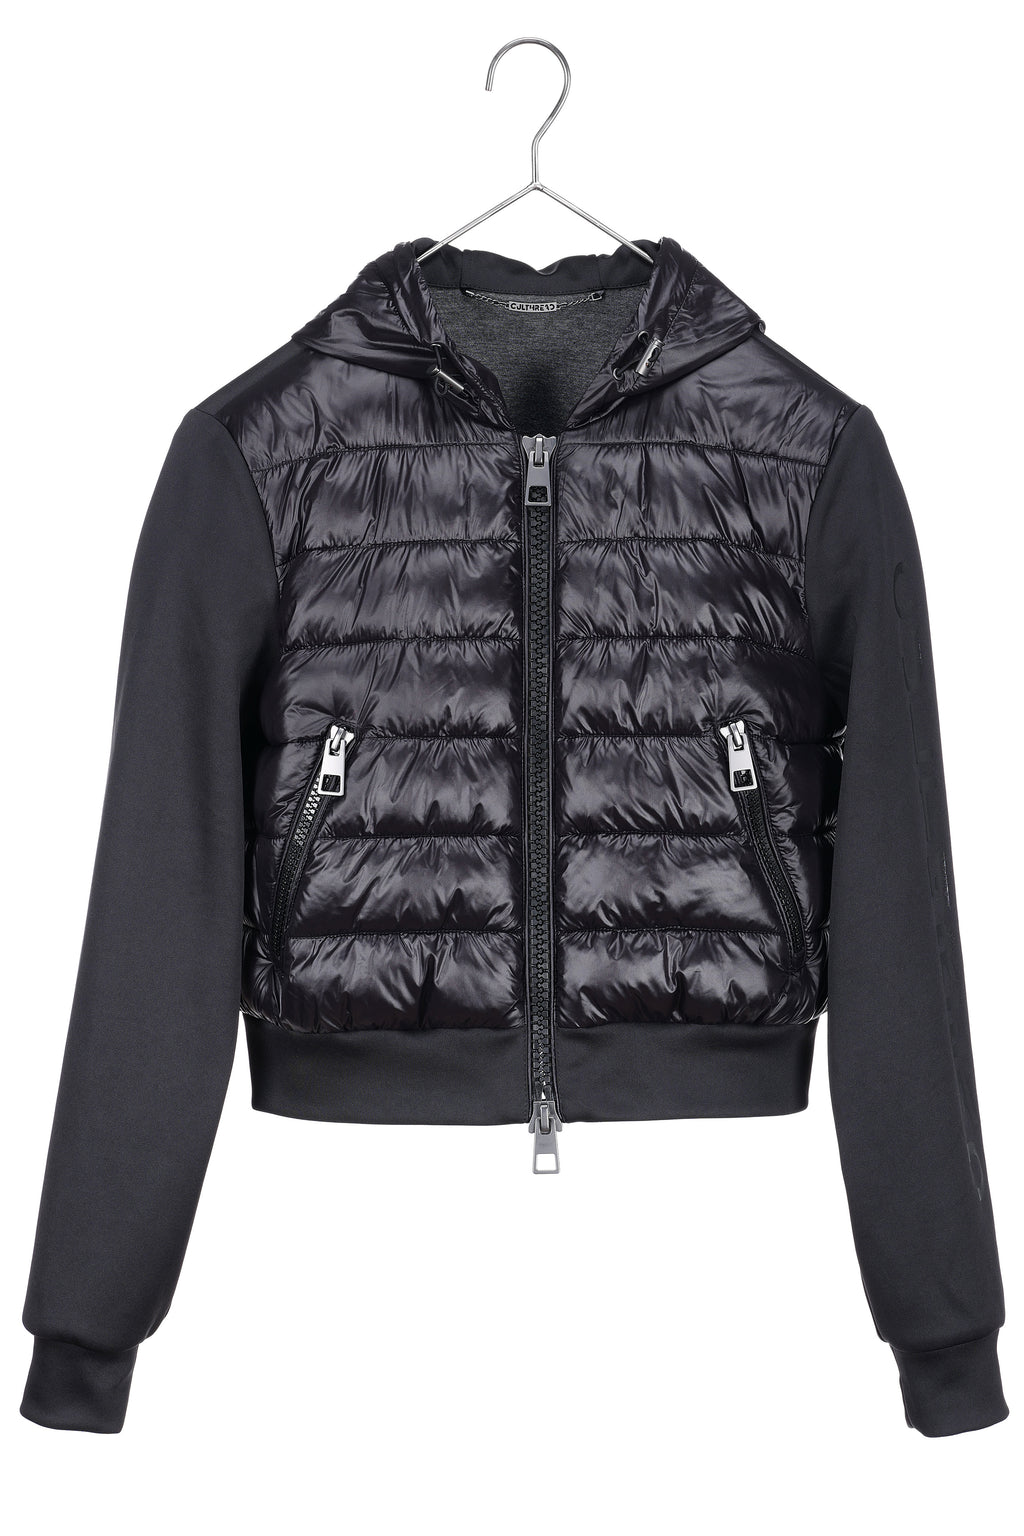 recycled black sweatshirt bomber jacket - [culthread]